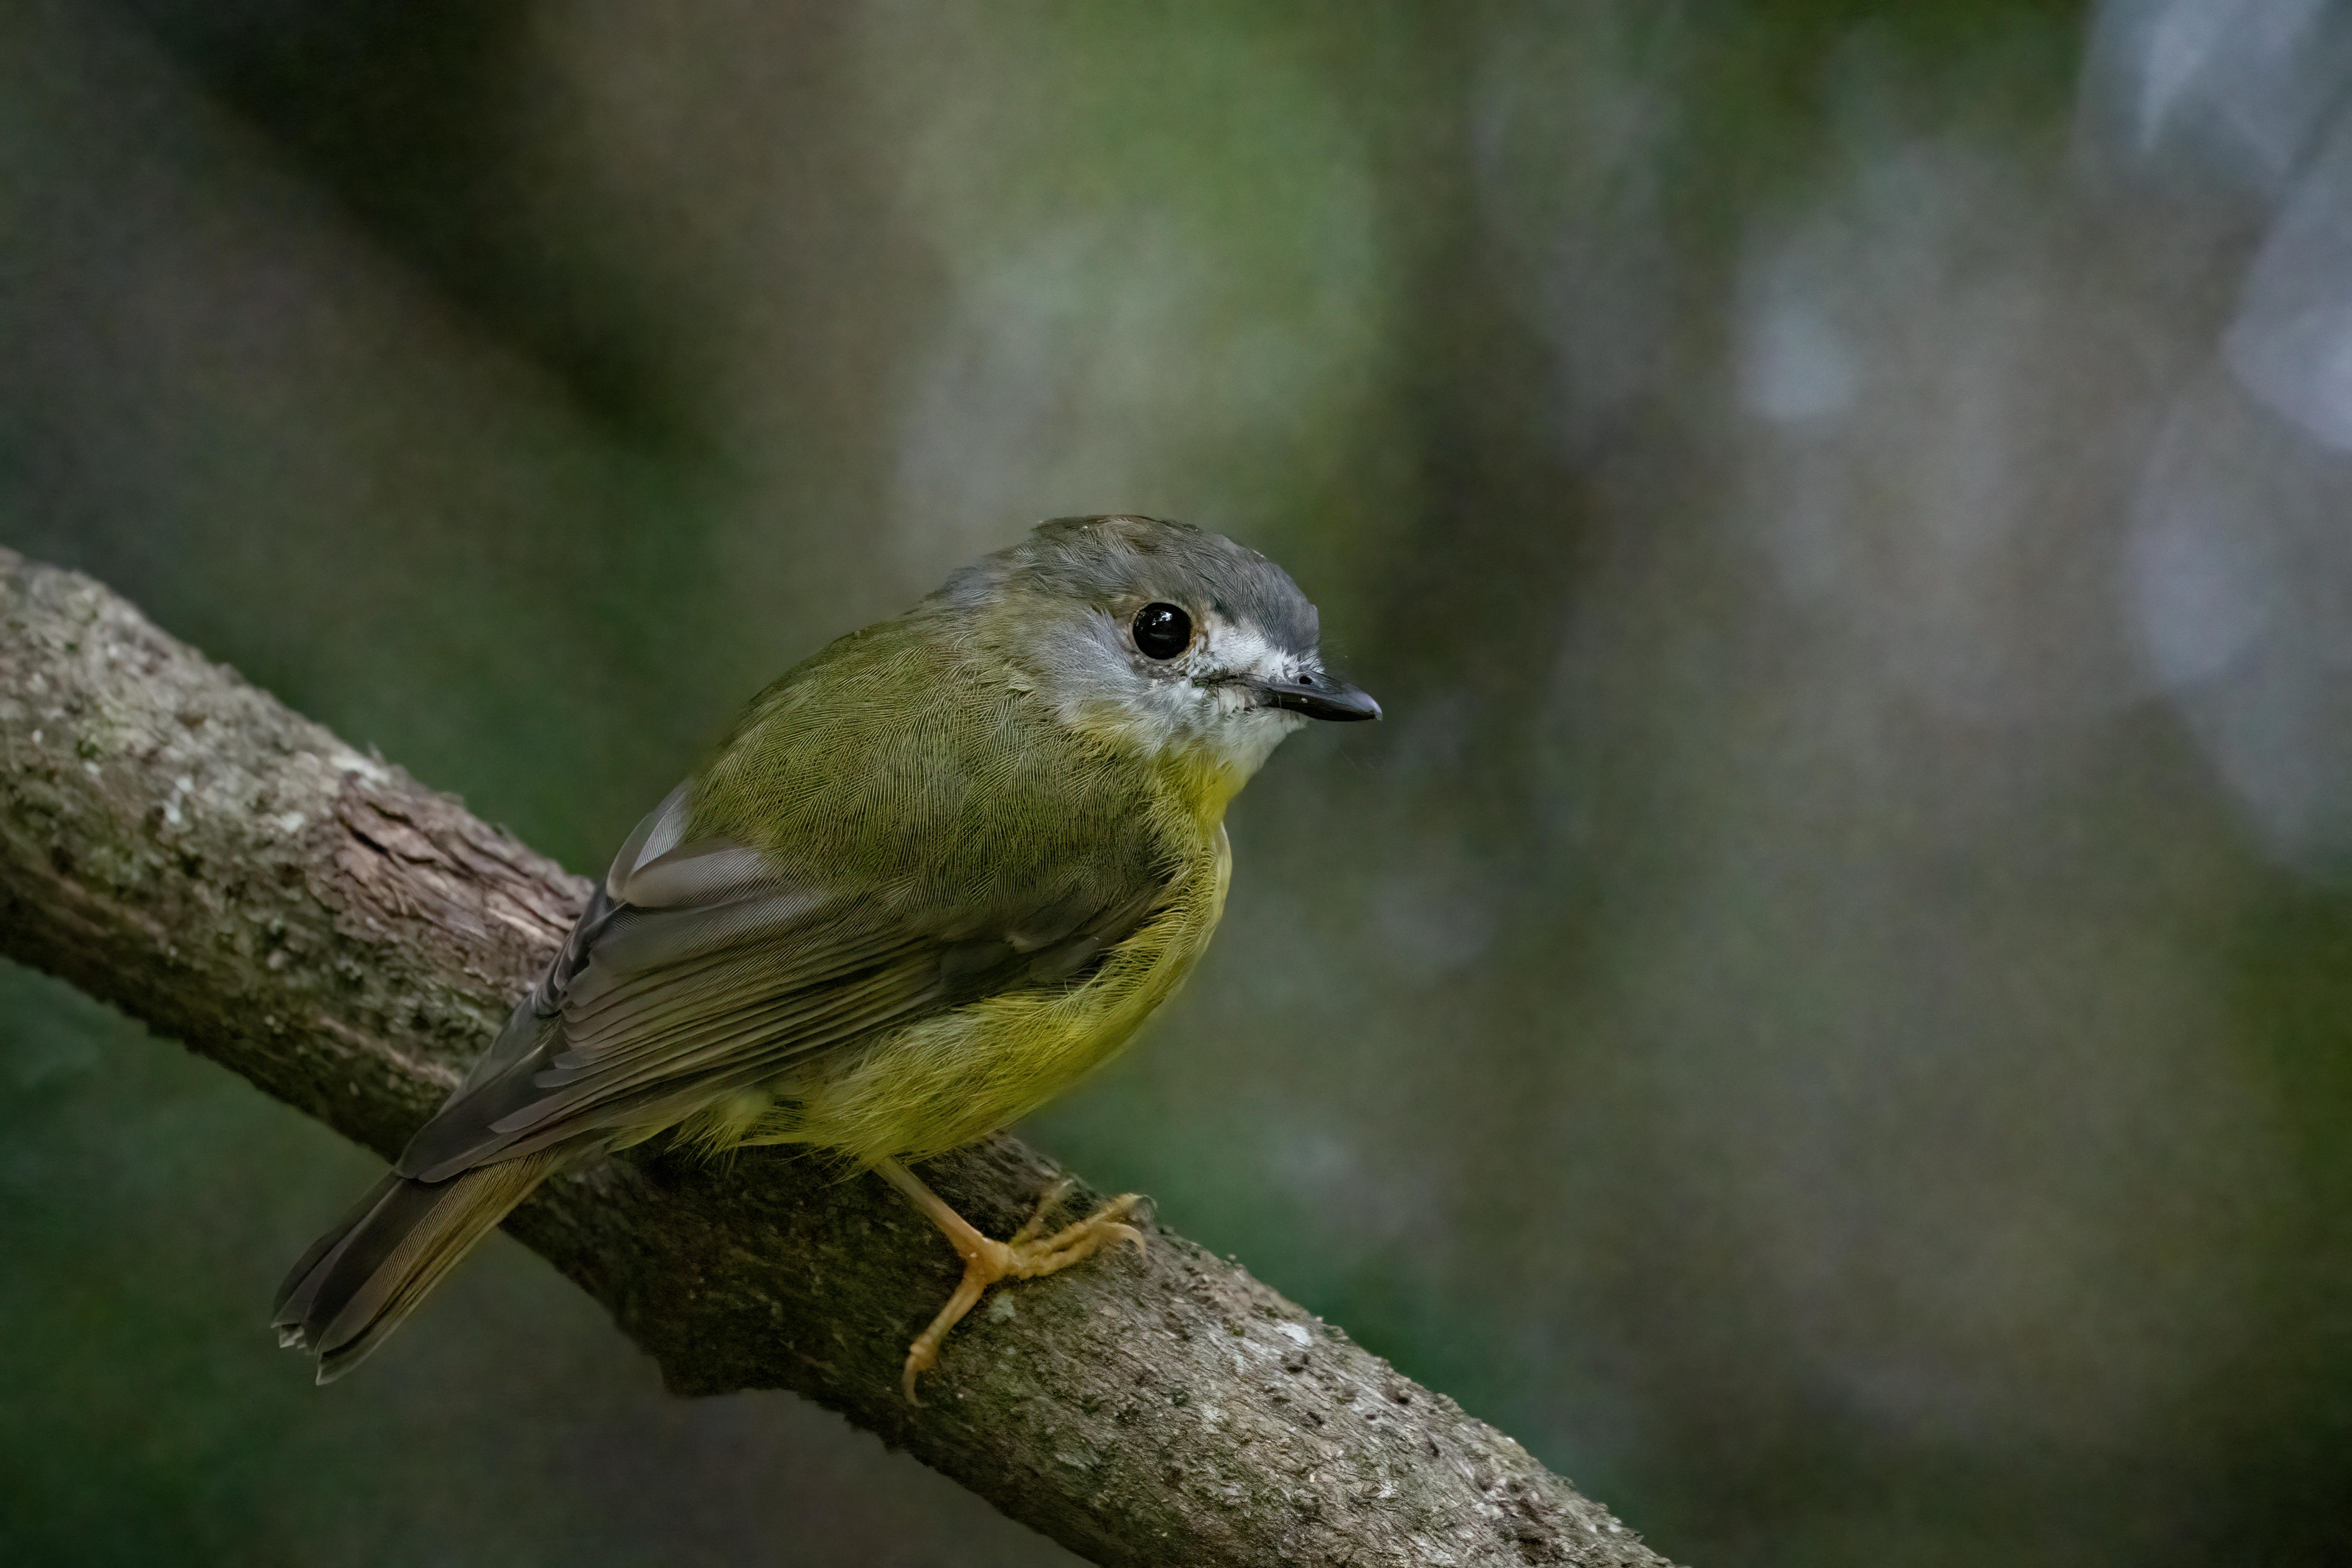 Pale yellow robin (Photo credit: Marama Hopkins)